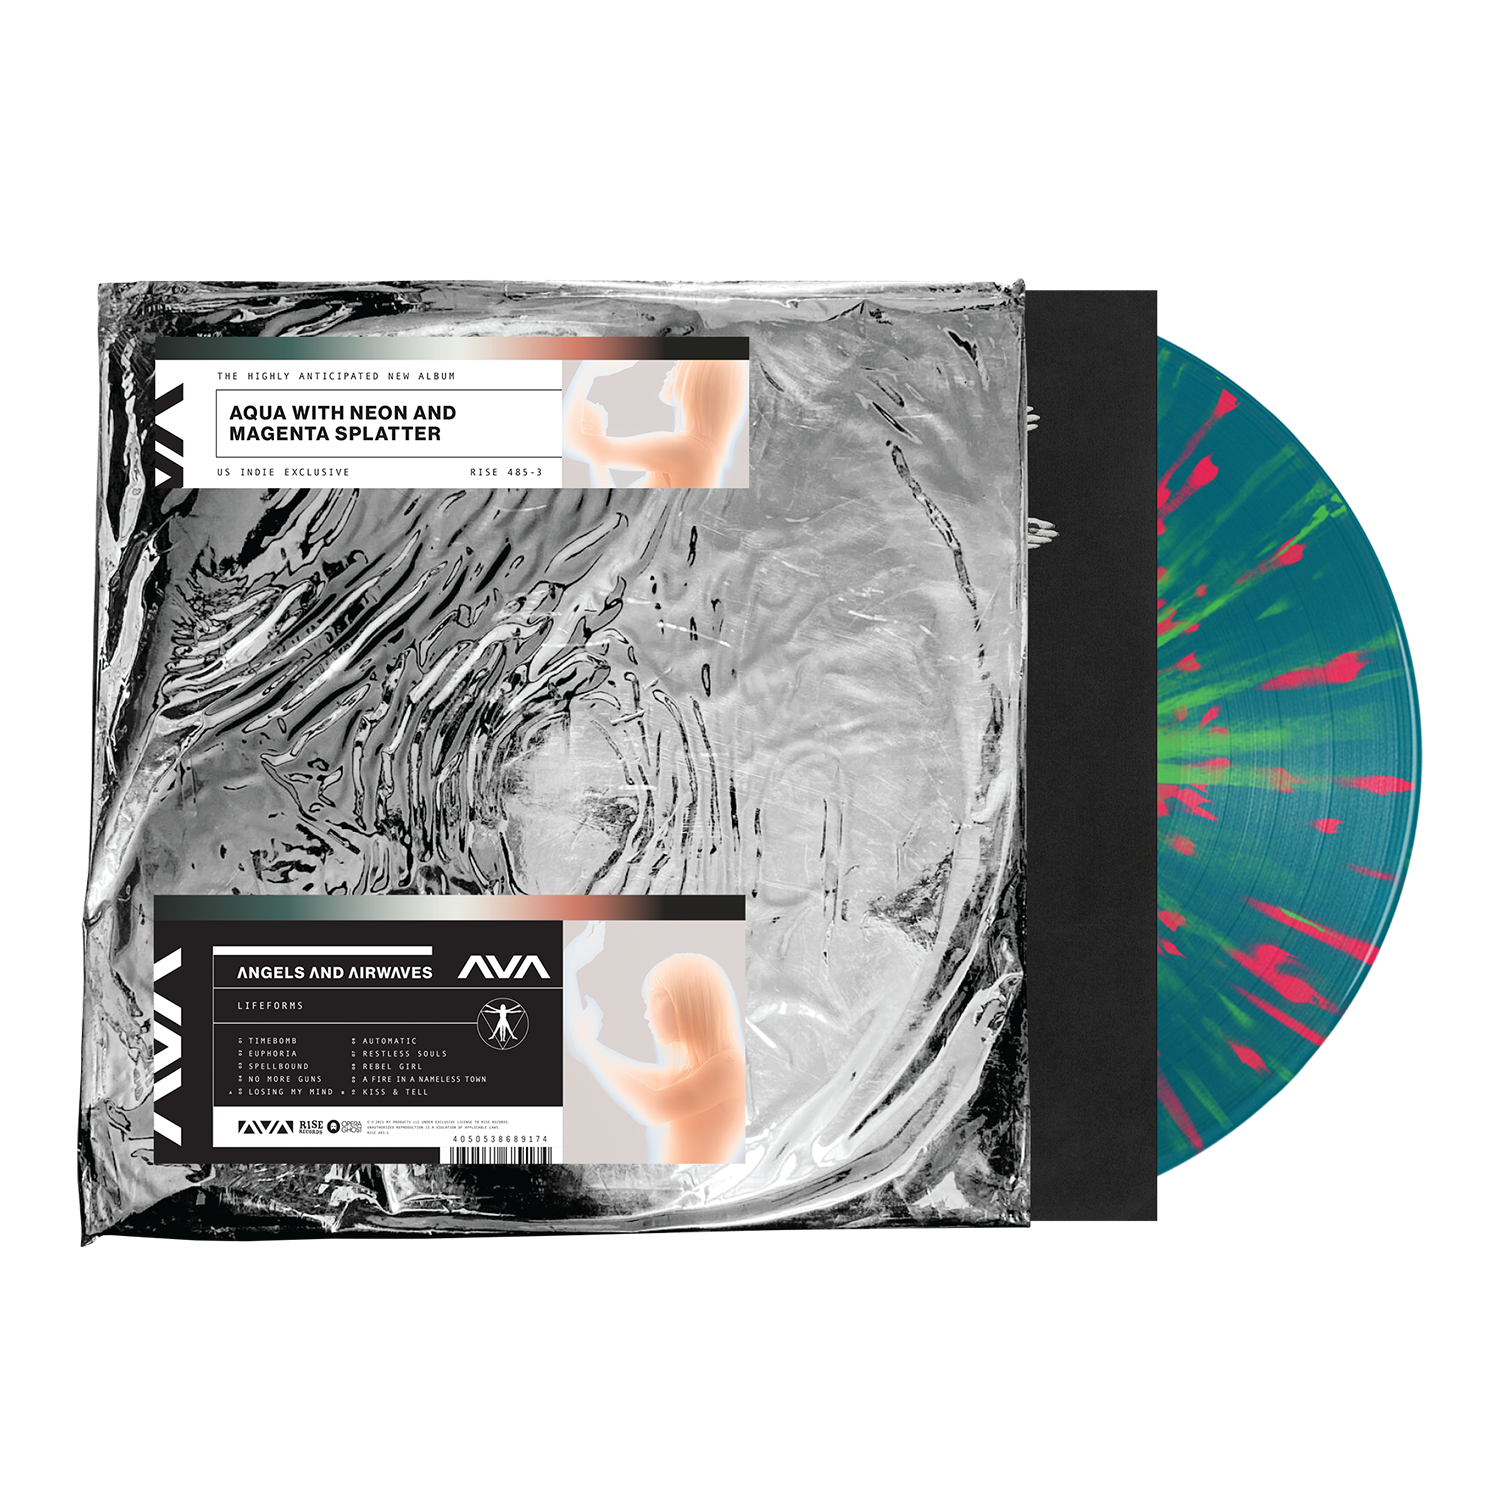 Buy Angels & Airwaves - Lifeforms (Indie Exclusive, Limited Edition Aqua with Neon and Magenta Splatter Vinyl)